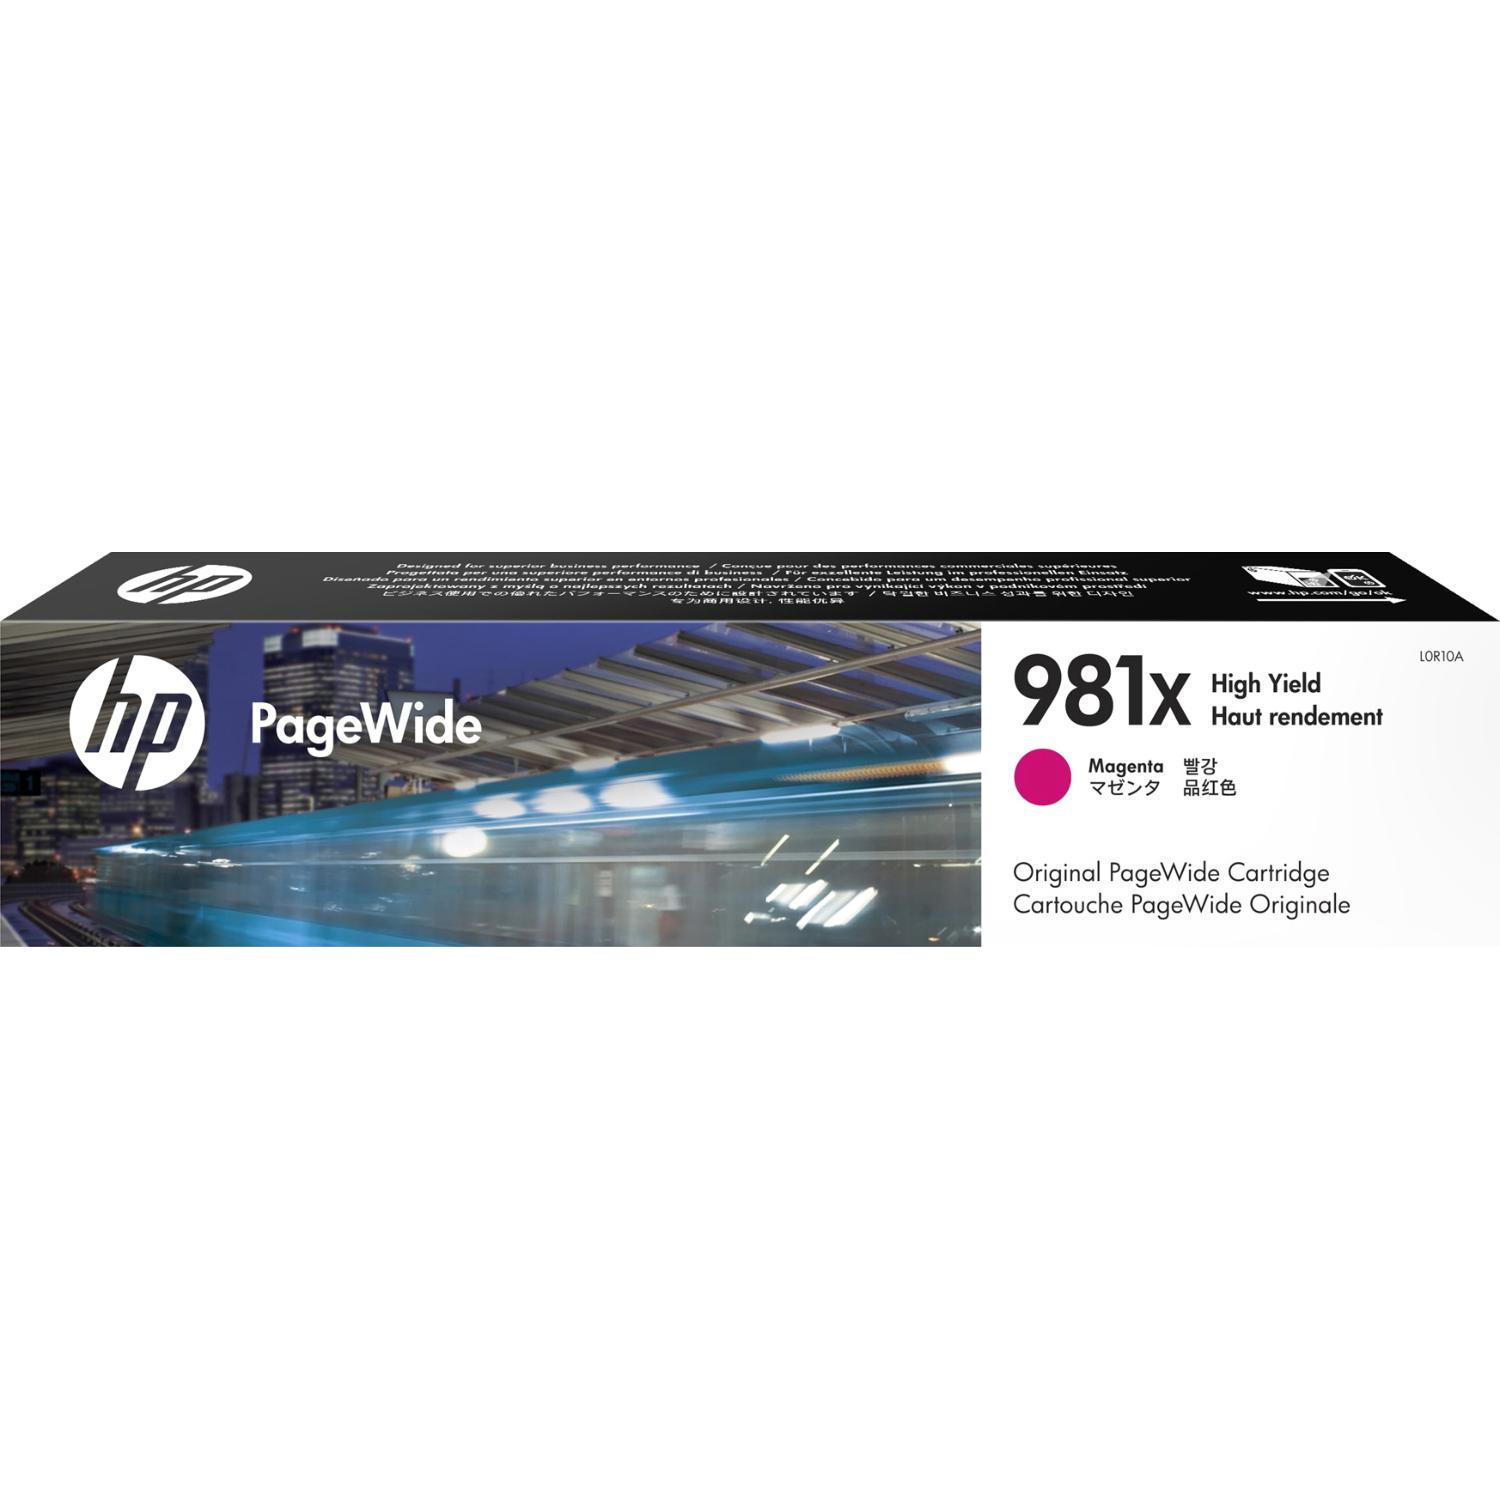 Картридж Cartridge HP 981X для PageWide, пурпурный (10 000 стр.)